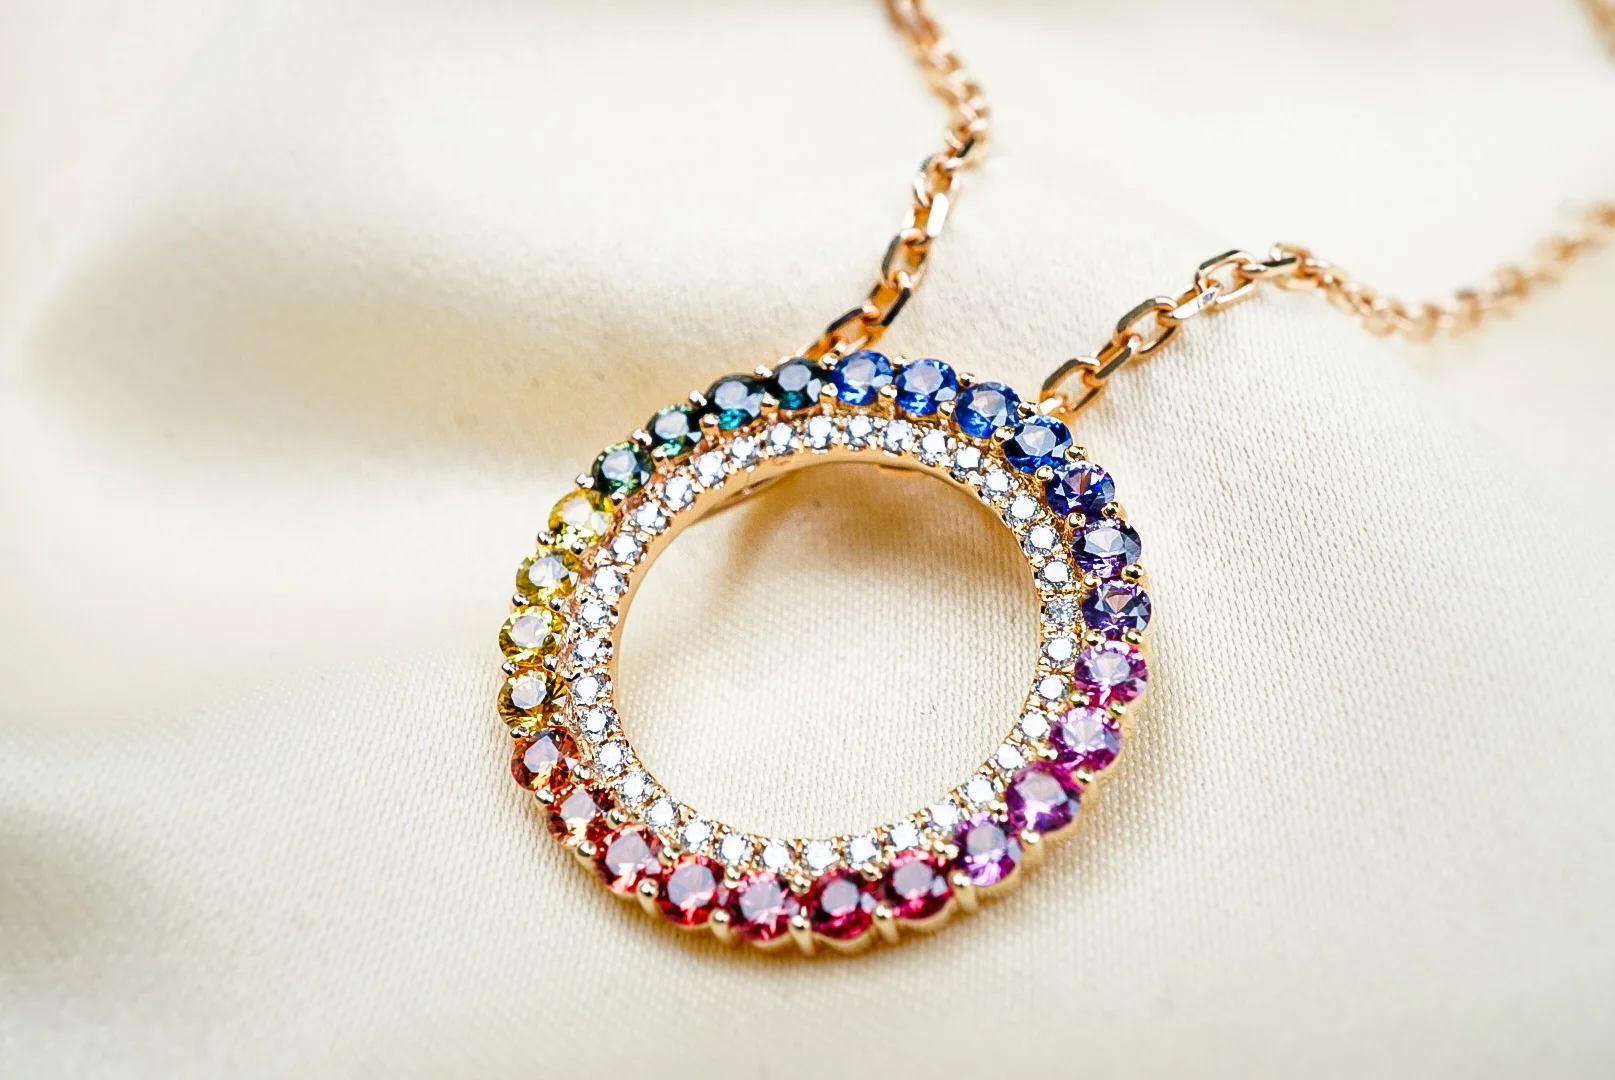 Explore Rainbow Sapphire Jewelry Collection